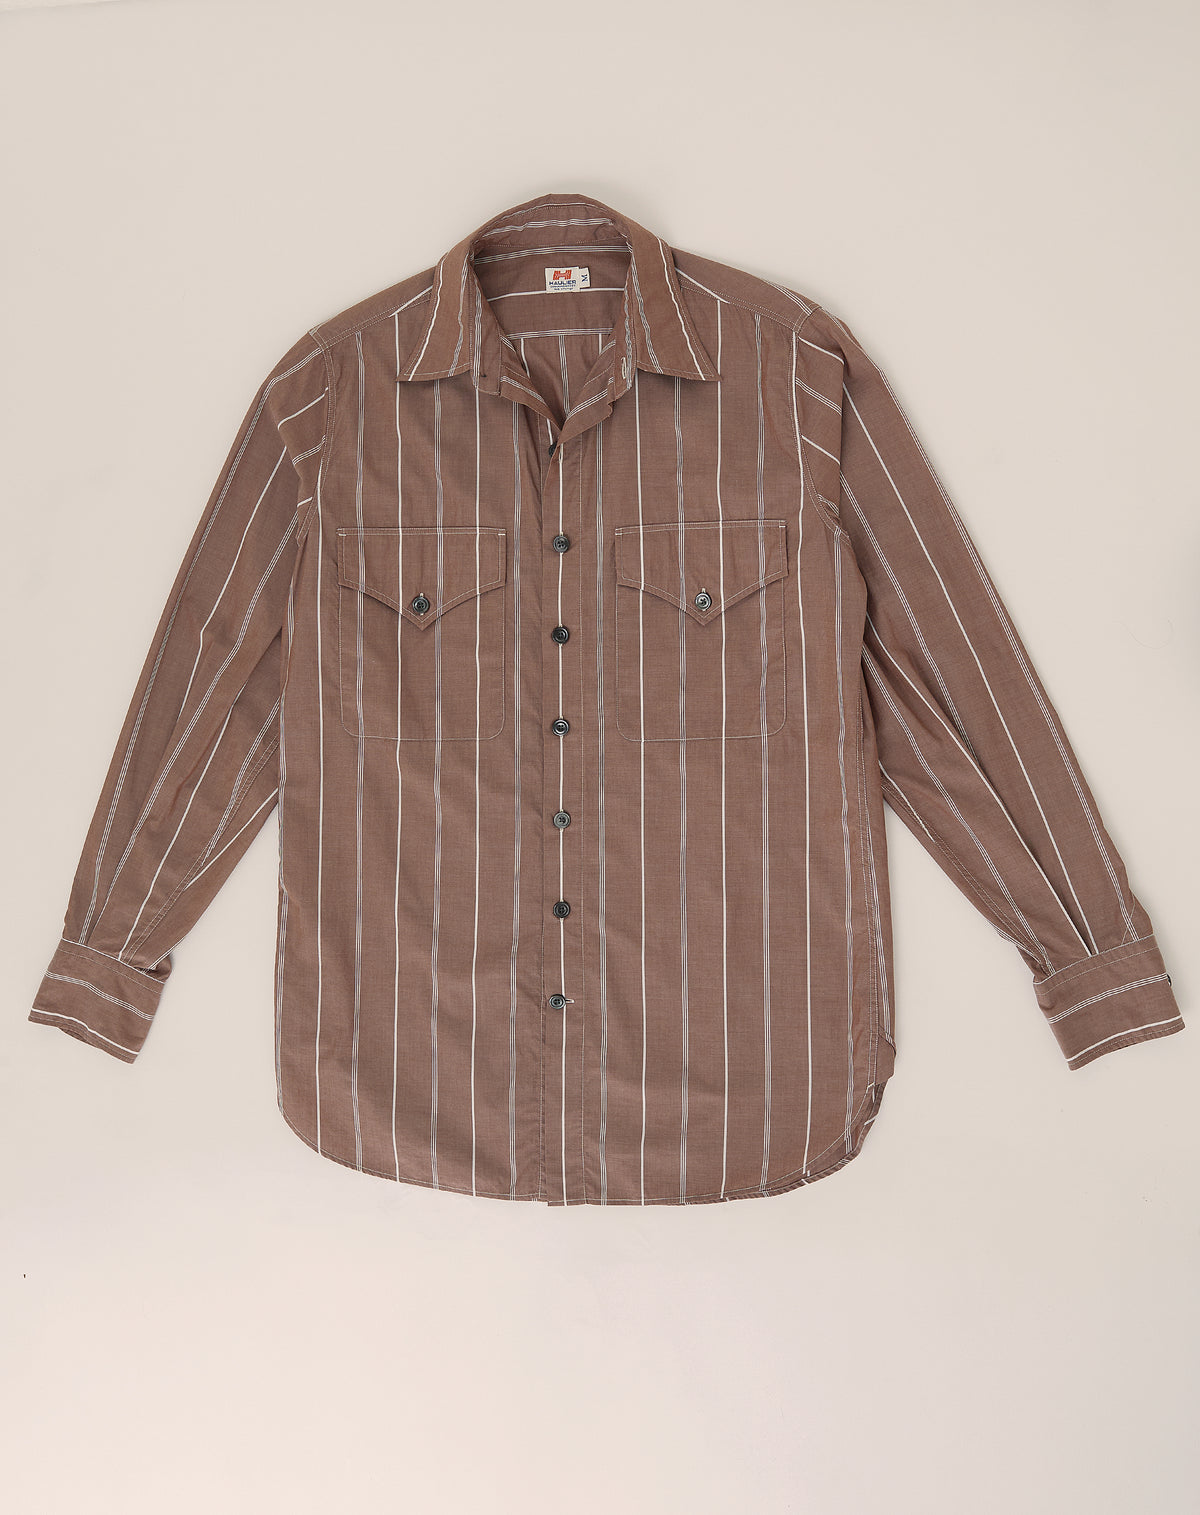 Service Shirt - Brown Multi Stripe